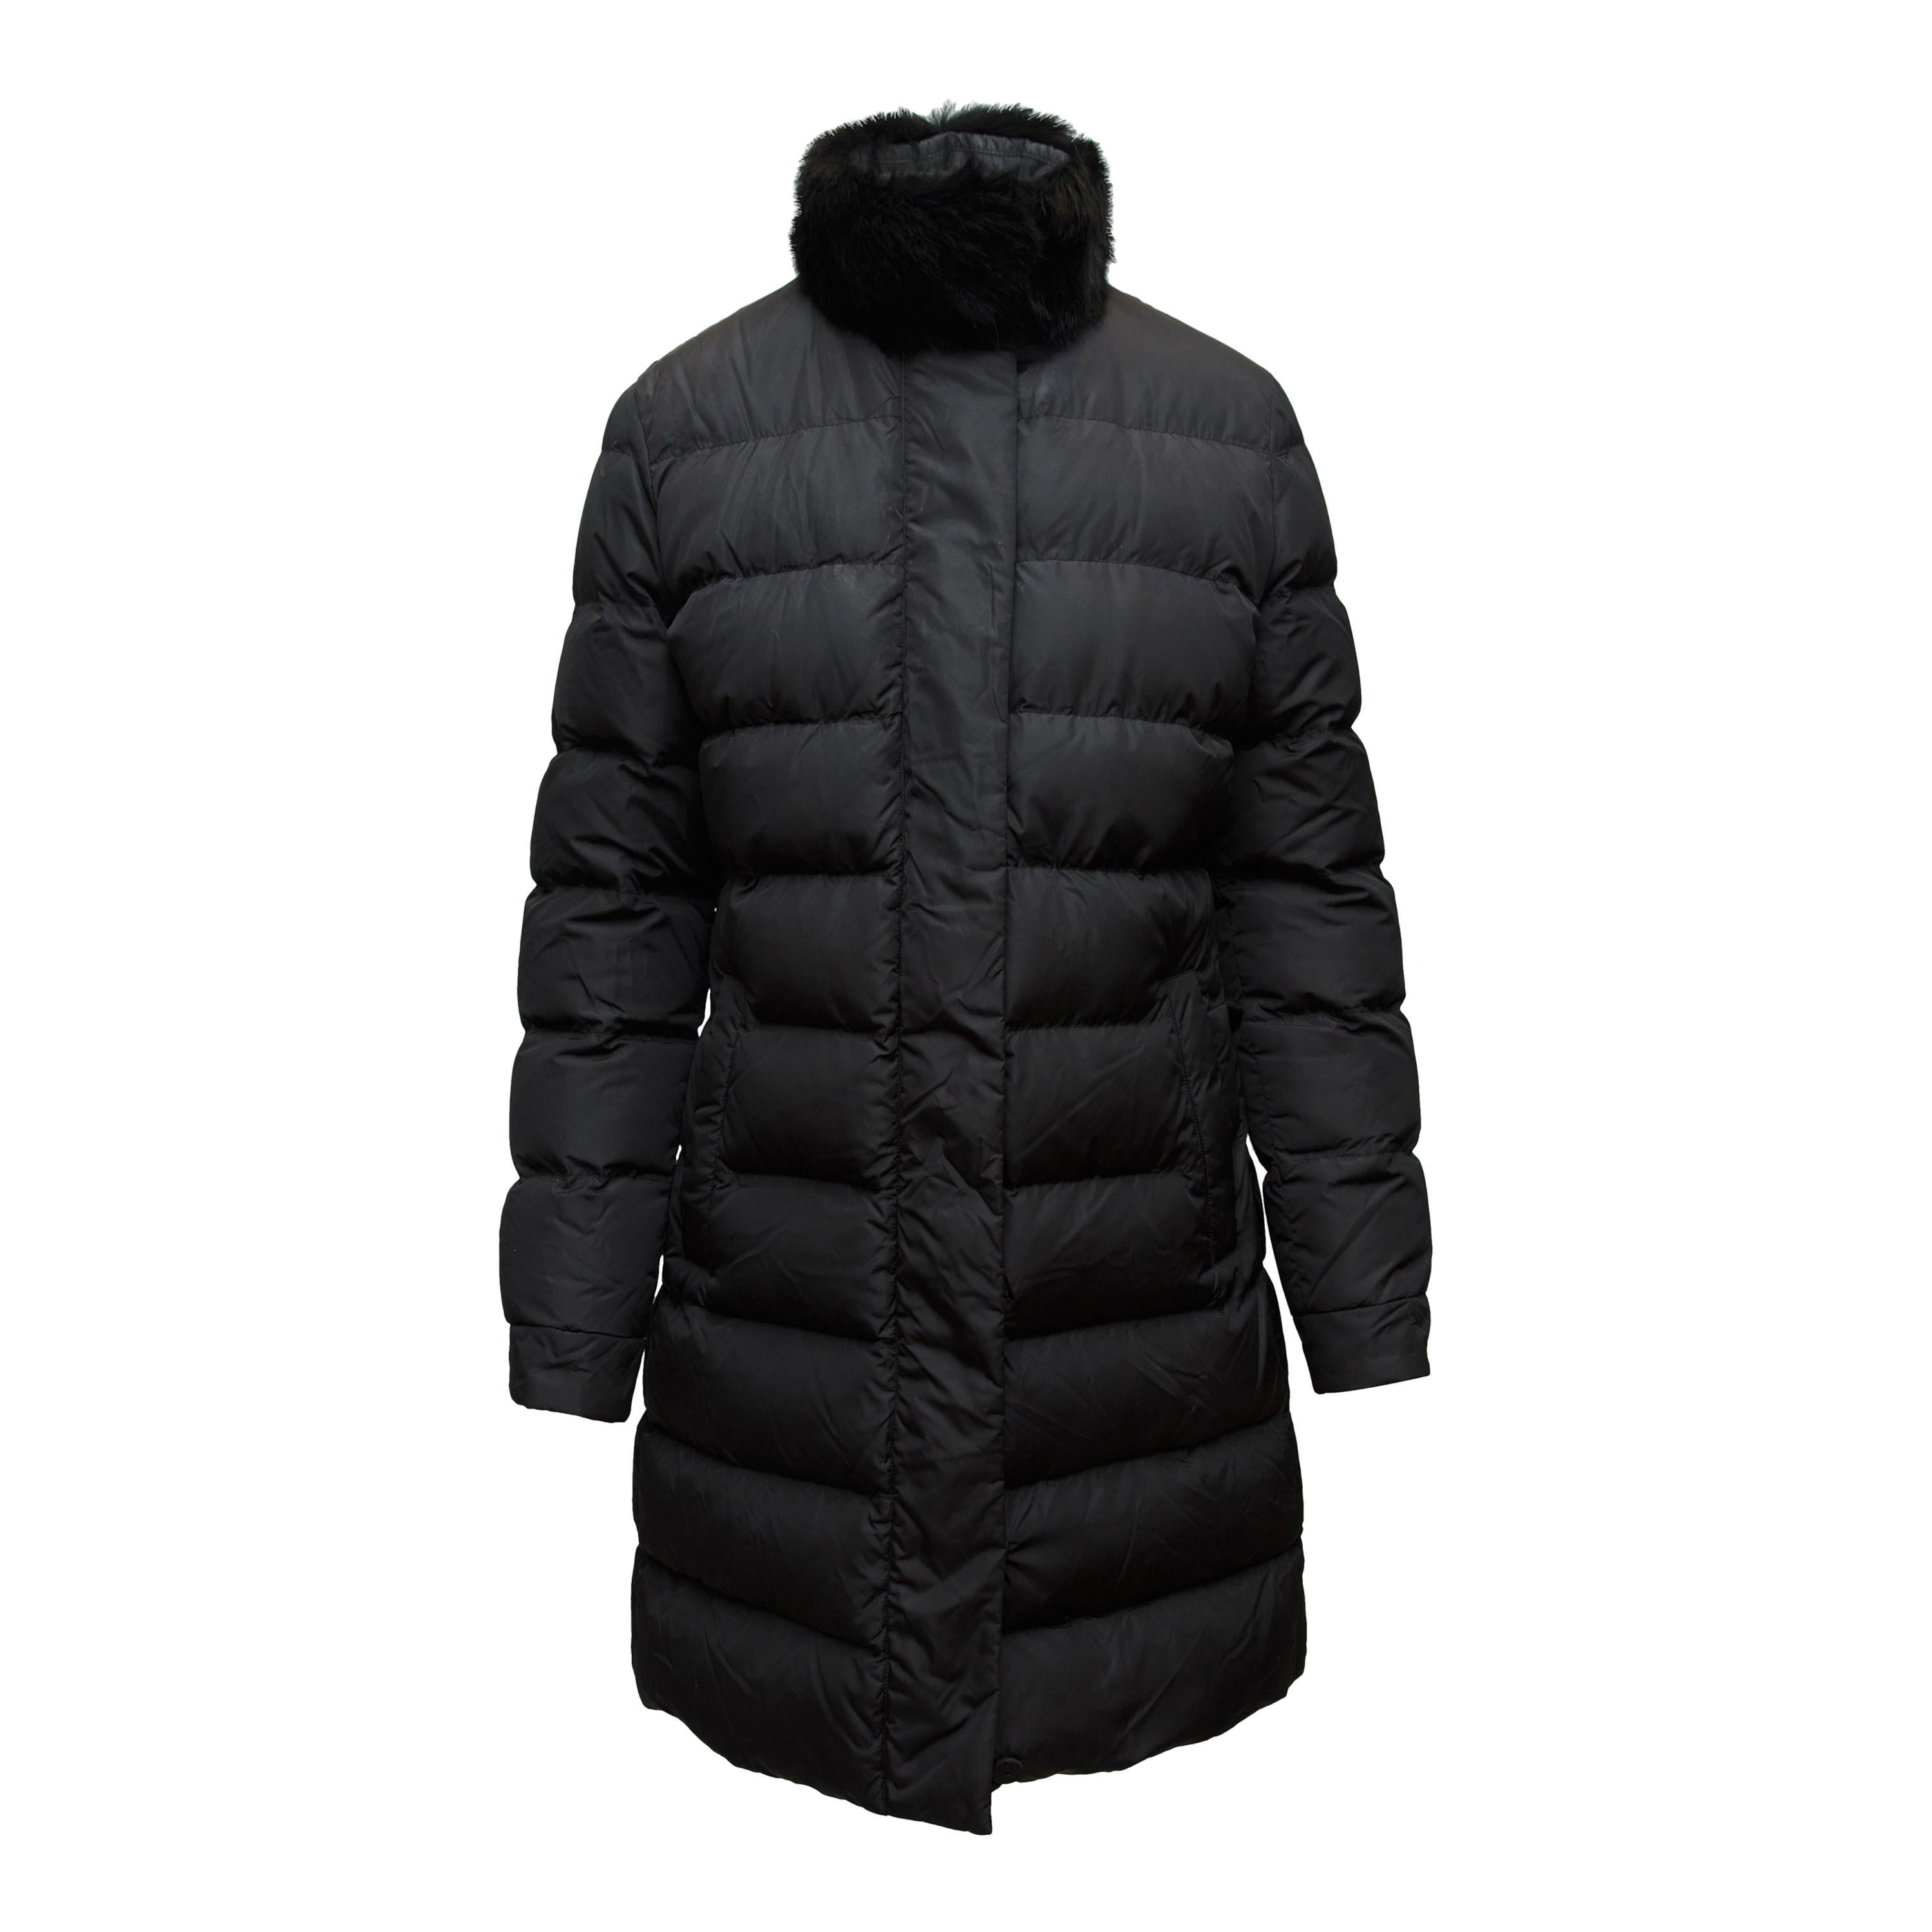 Prada Black Fur-Trimmed Puffer Coat